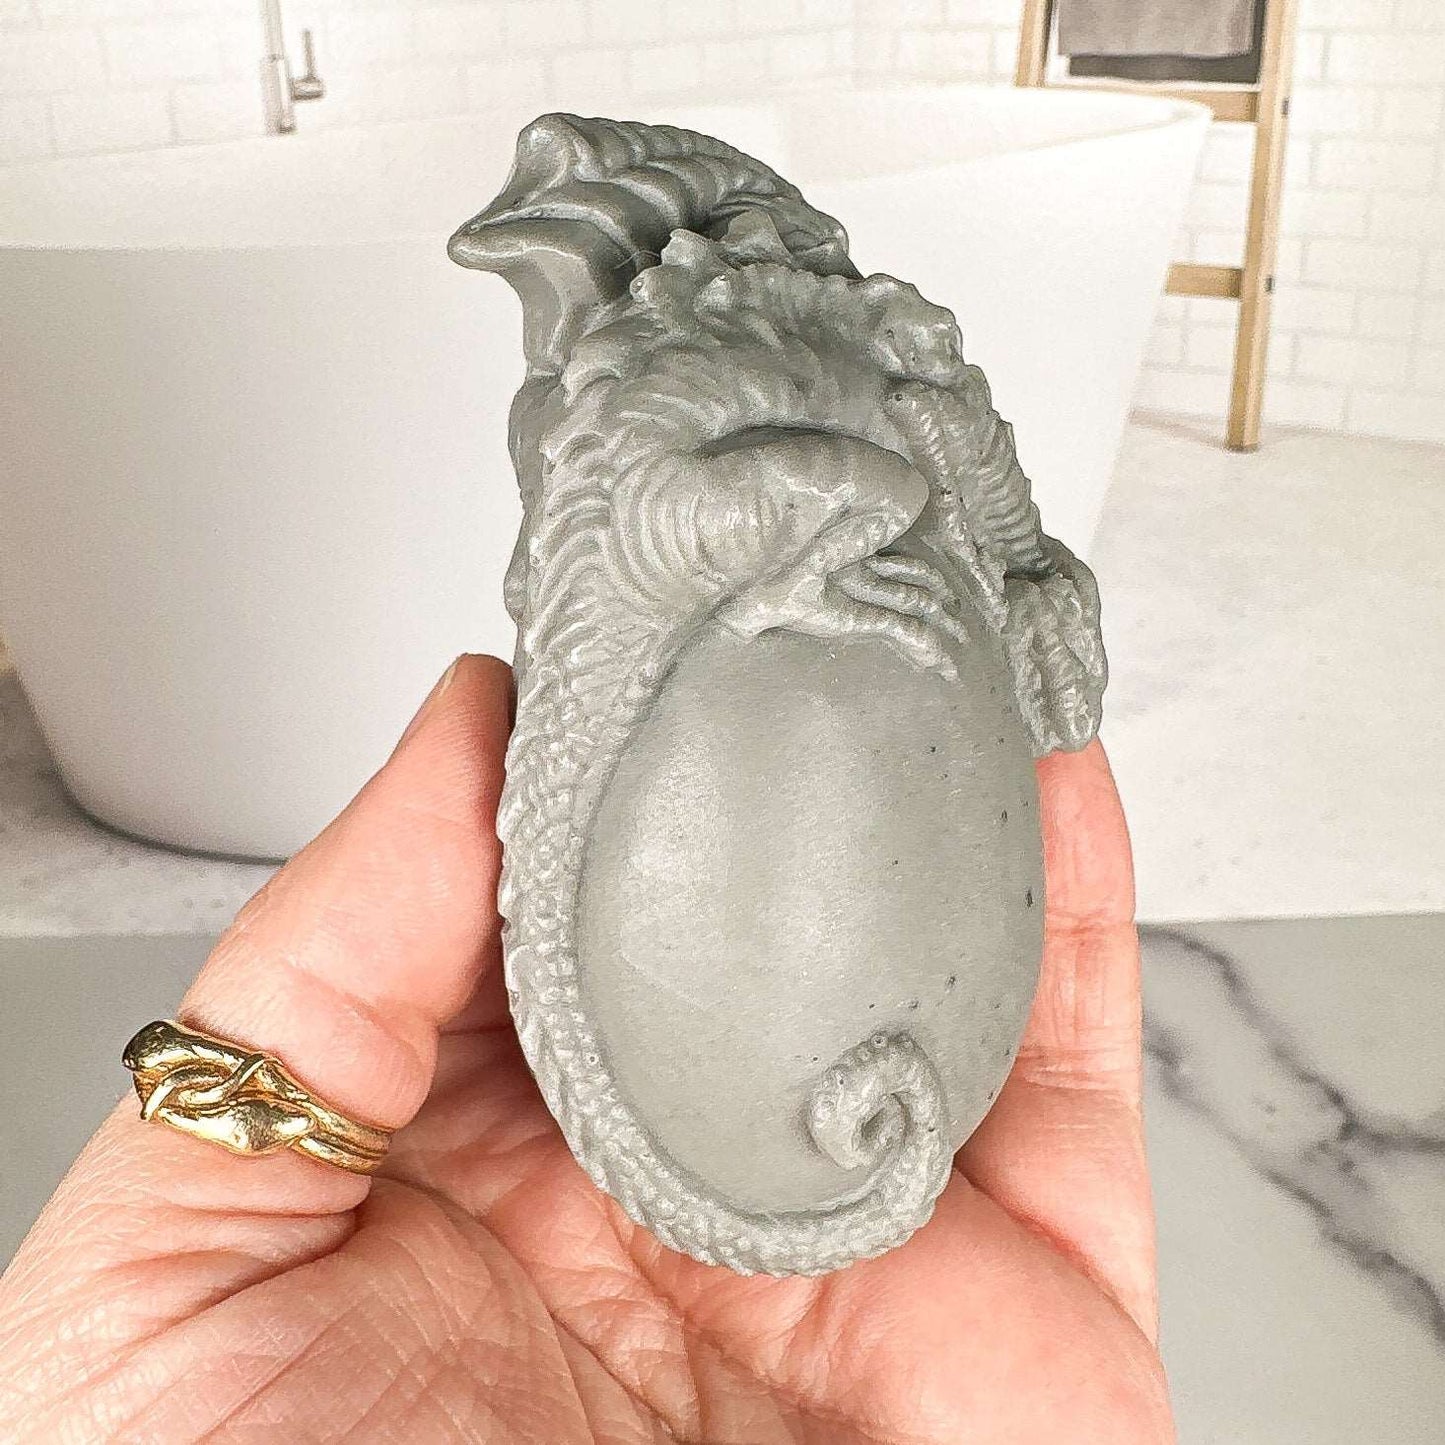 Dragon Egg Soap Bar